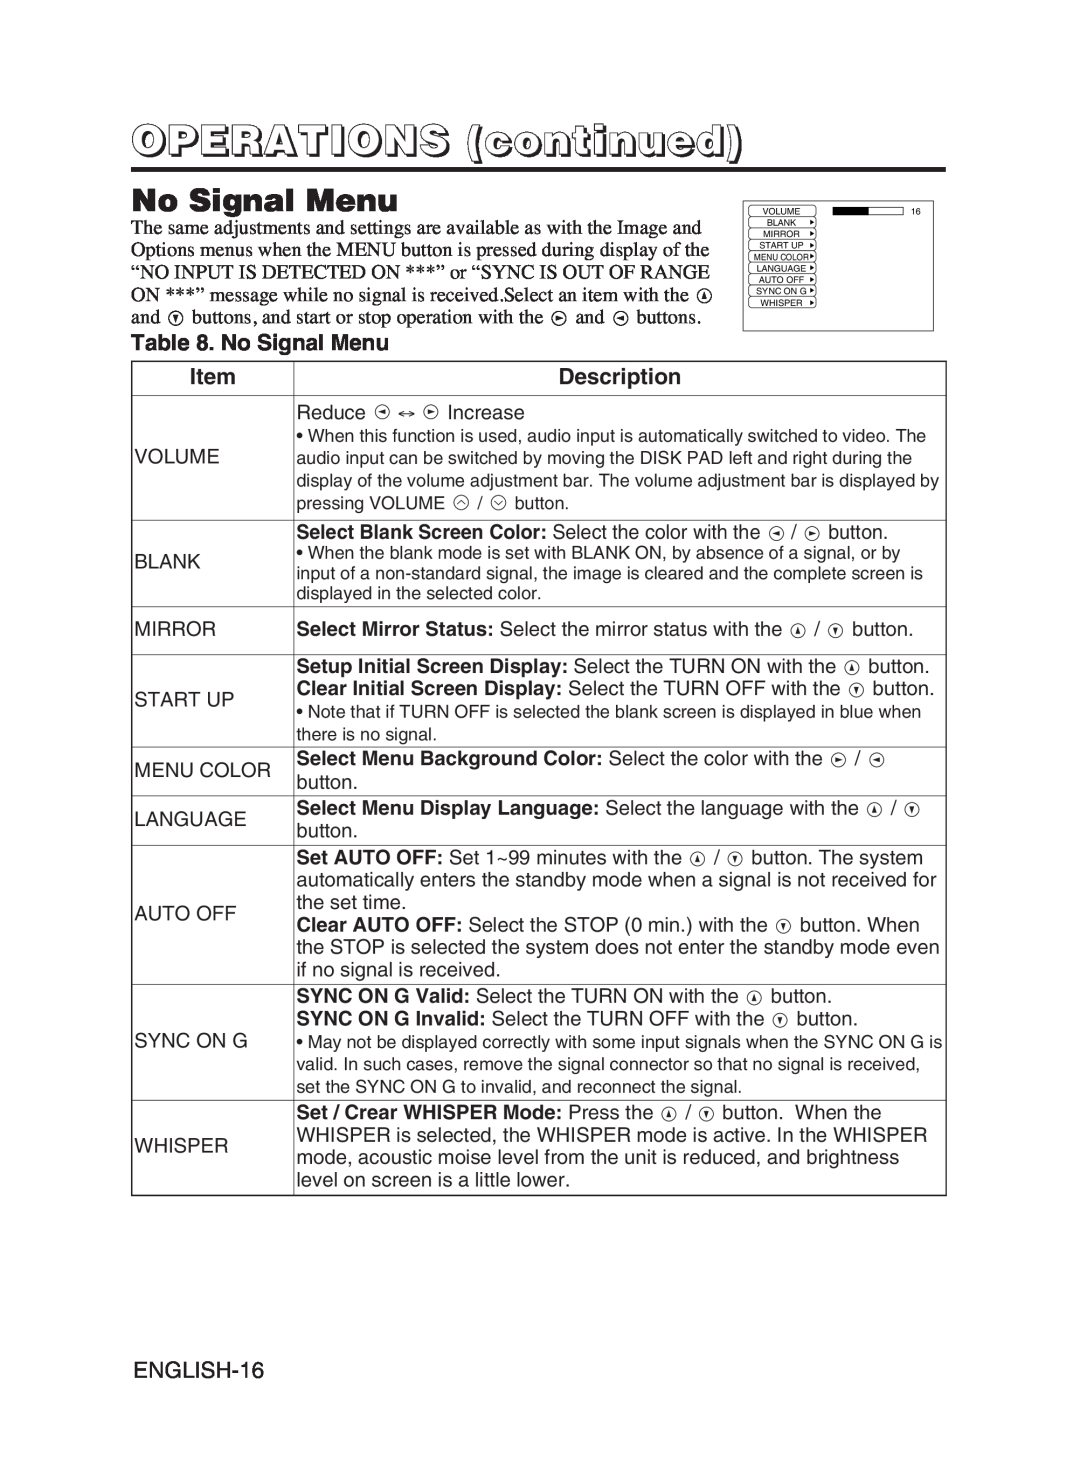 Hitachi CP-S370W user manual No Signal Menu, OPERATIONS continued, Description, ENGLISH-16 